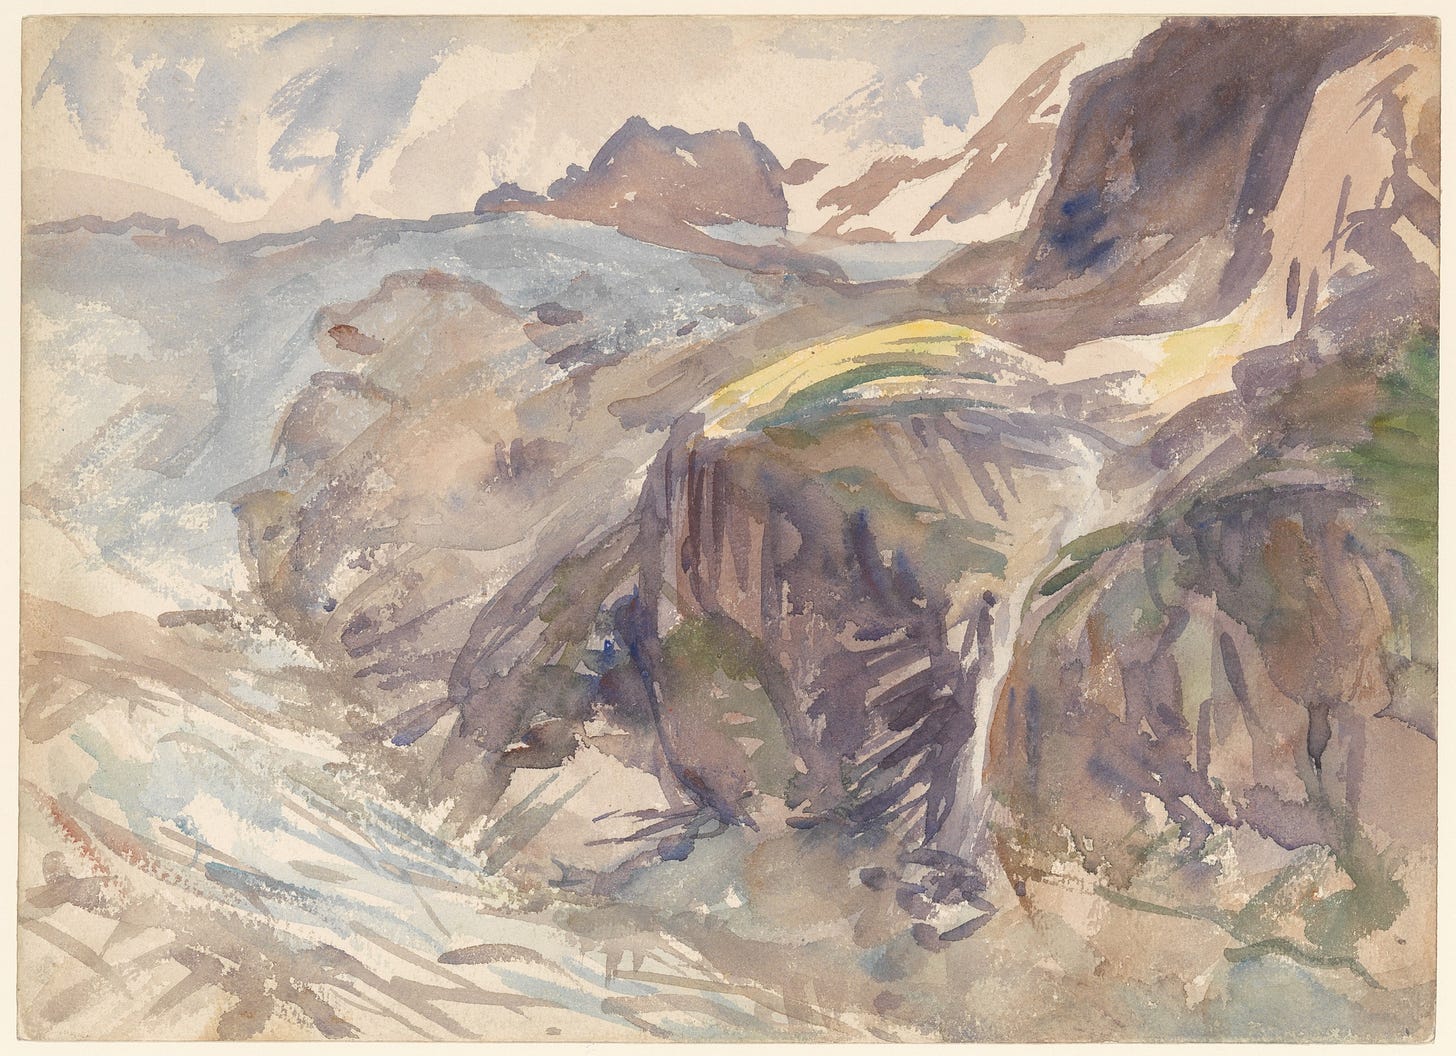 Artwork by John Singer Sargent (American, 1856-1925).